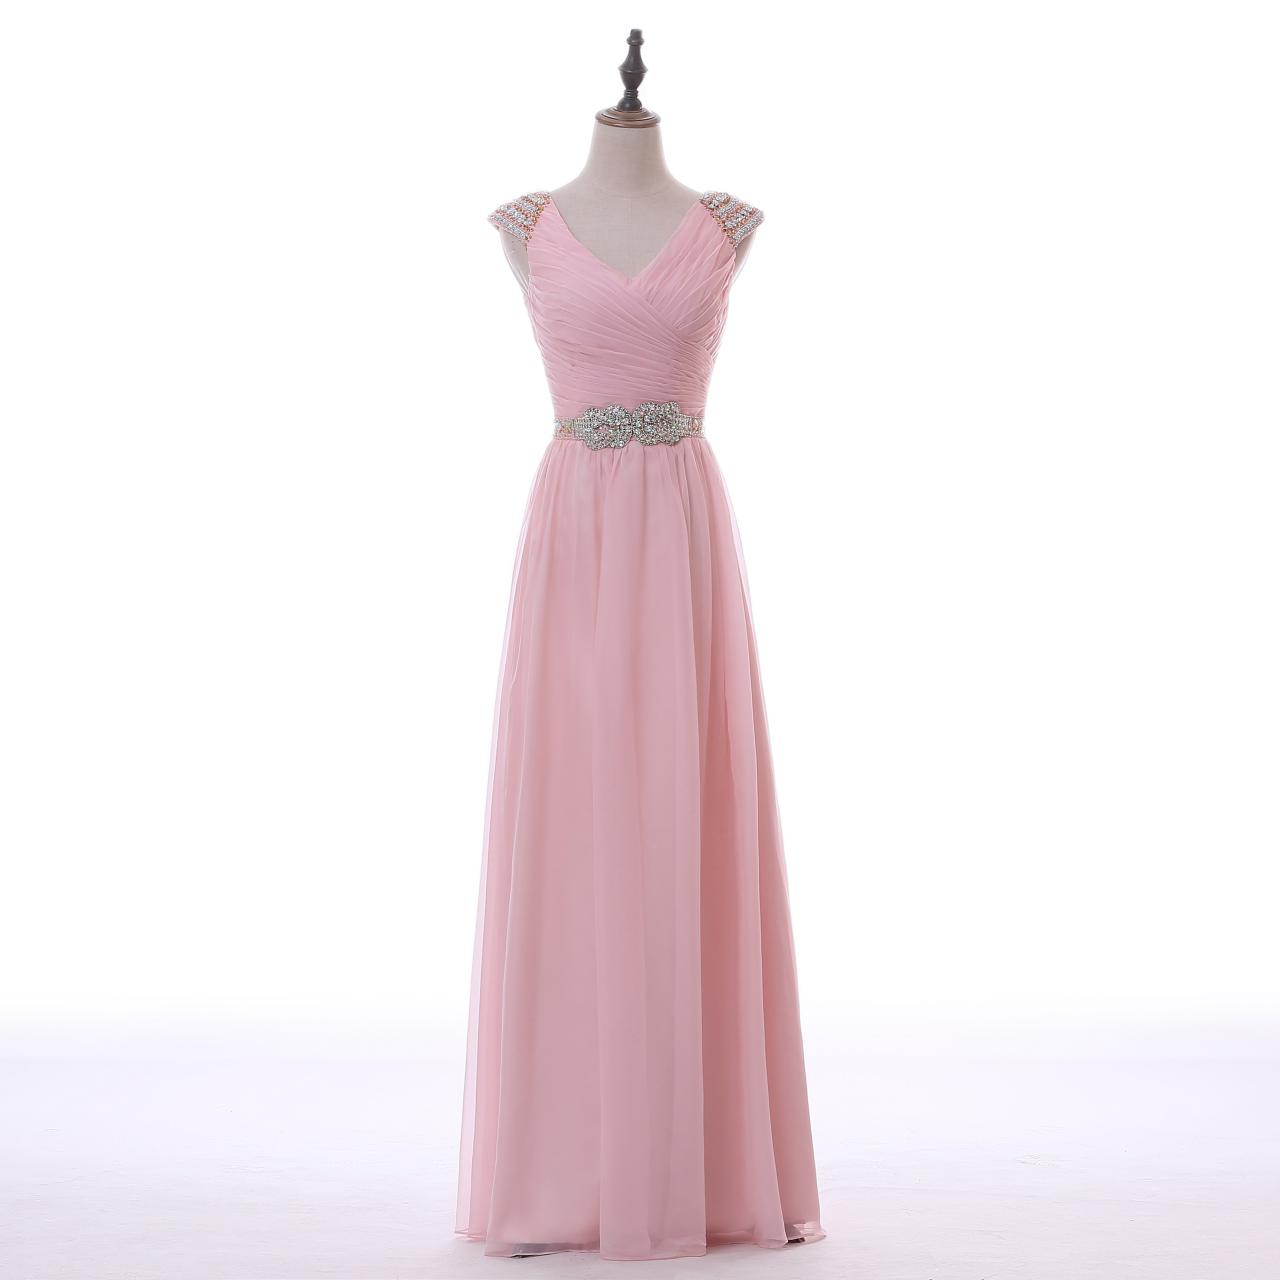 Sheath Long Pink Wedding Prom Dress With Crystal Belt